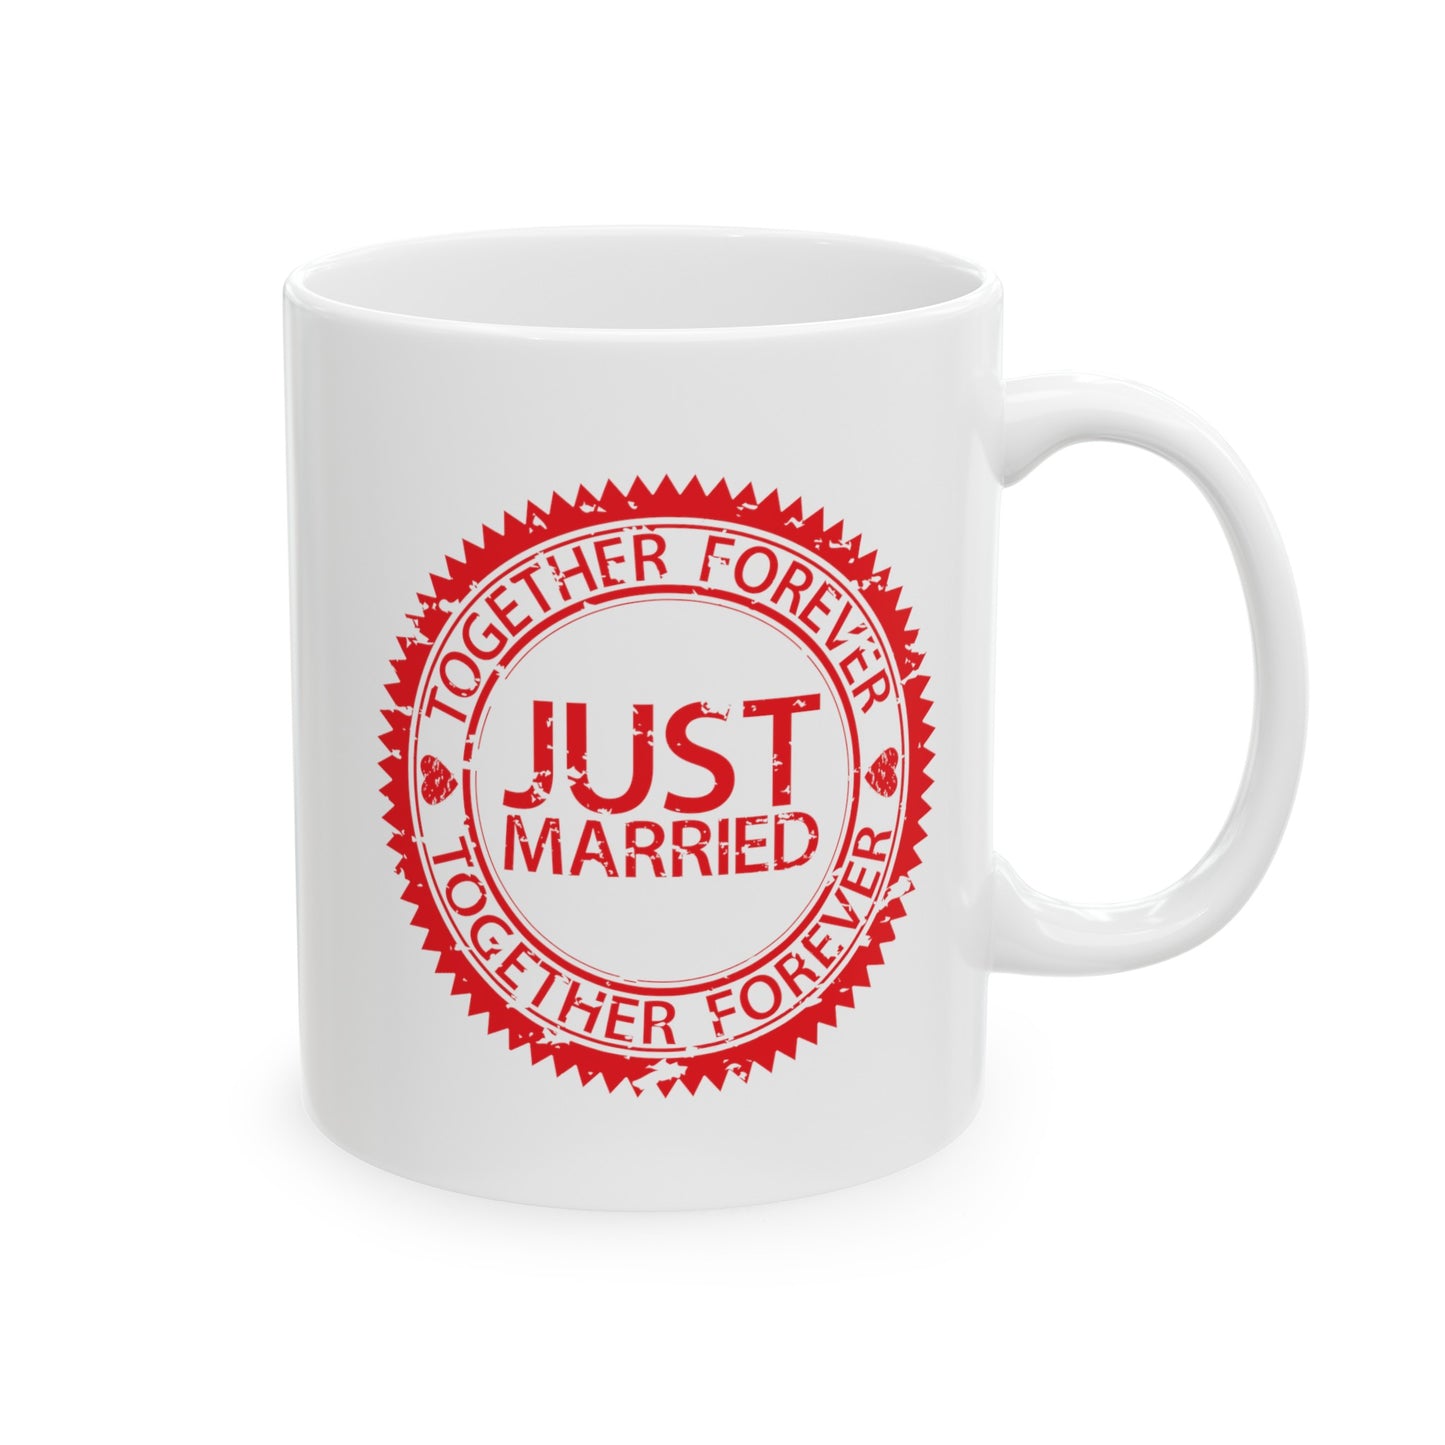 Just Married Coffee Mug - Double Sided White Ceramic 11oz by TheGlassyLass.com